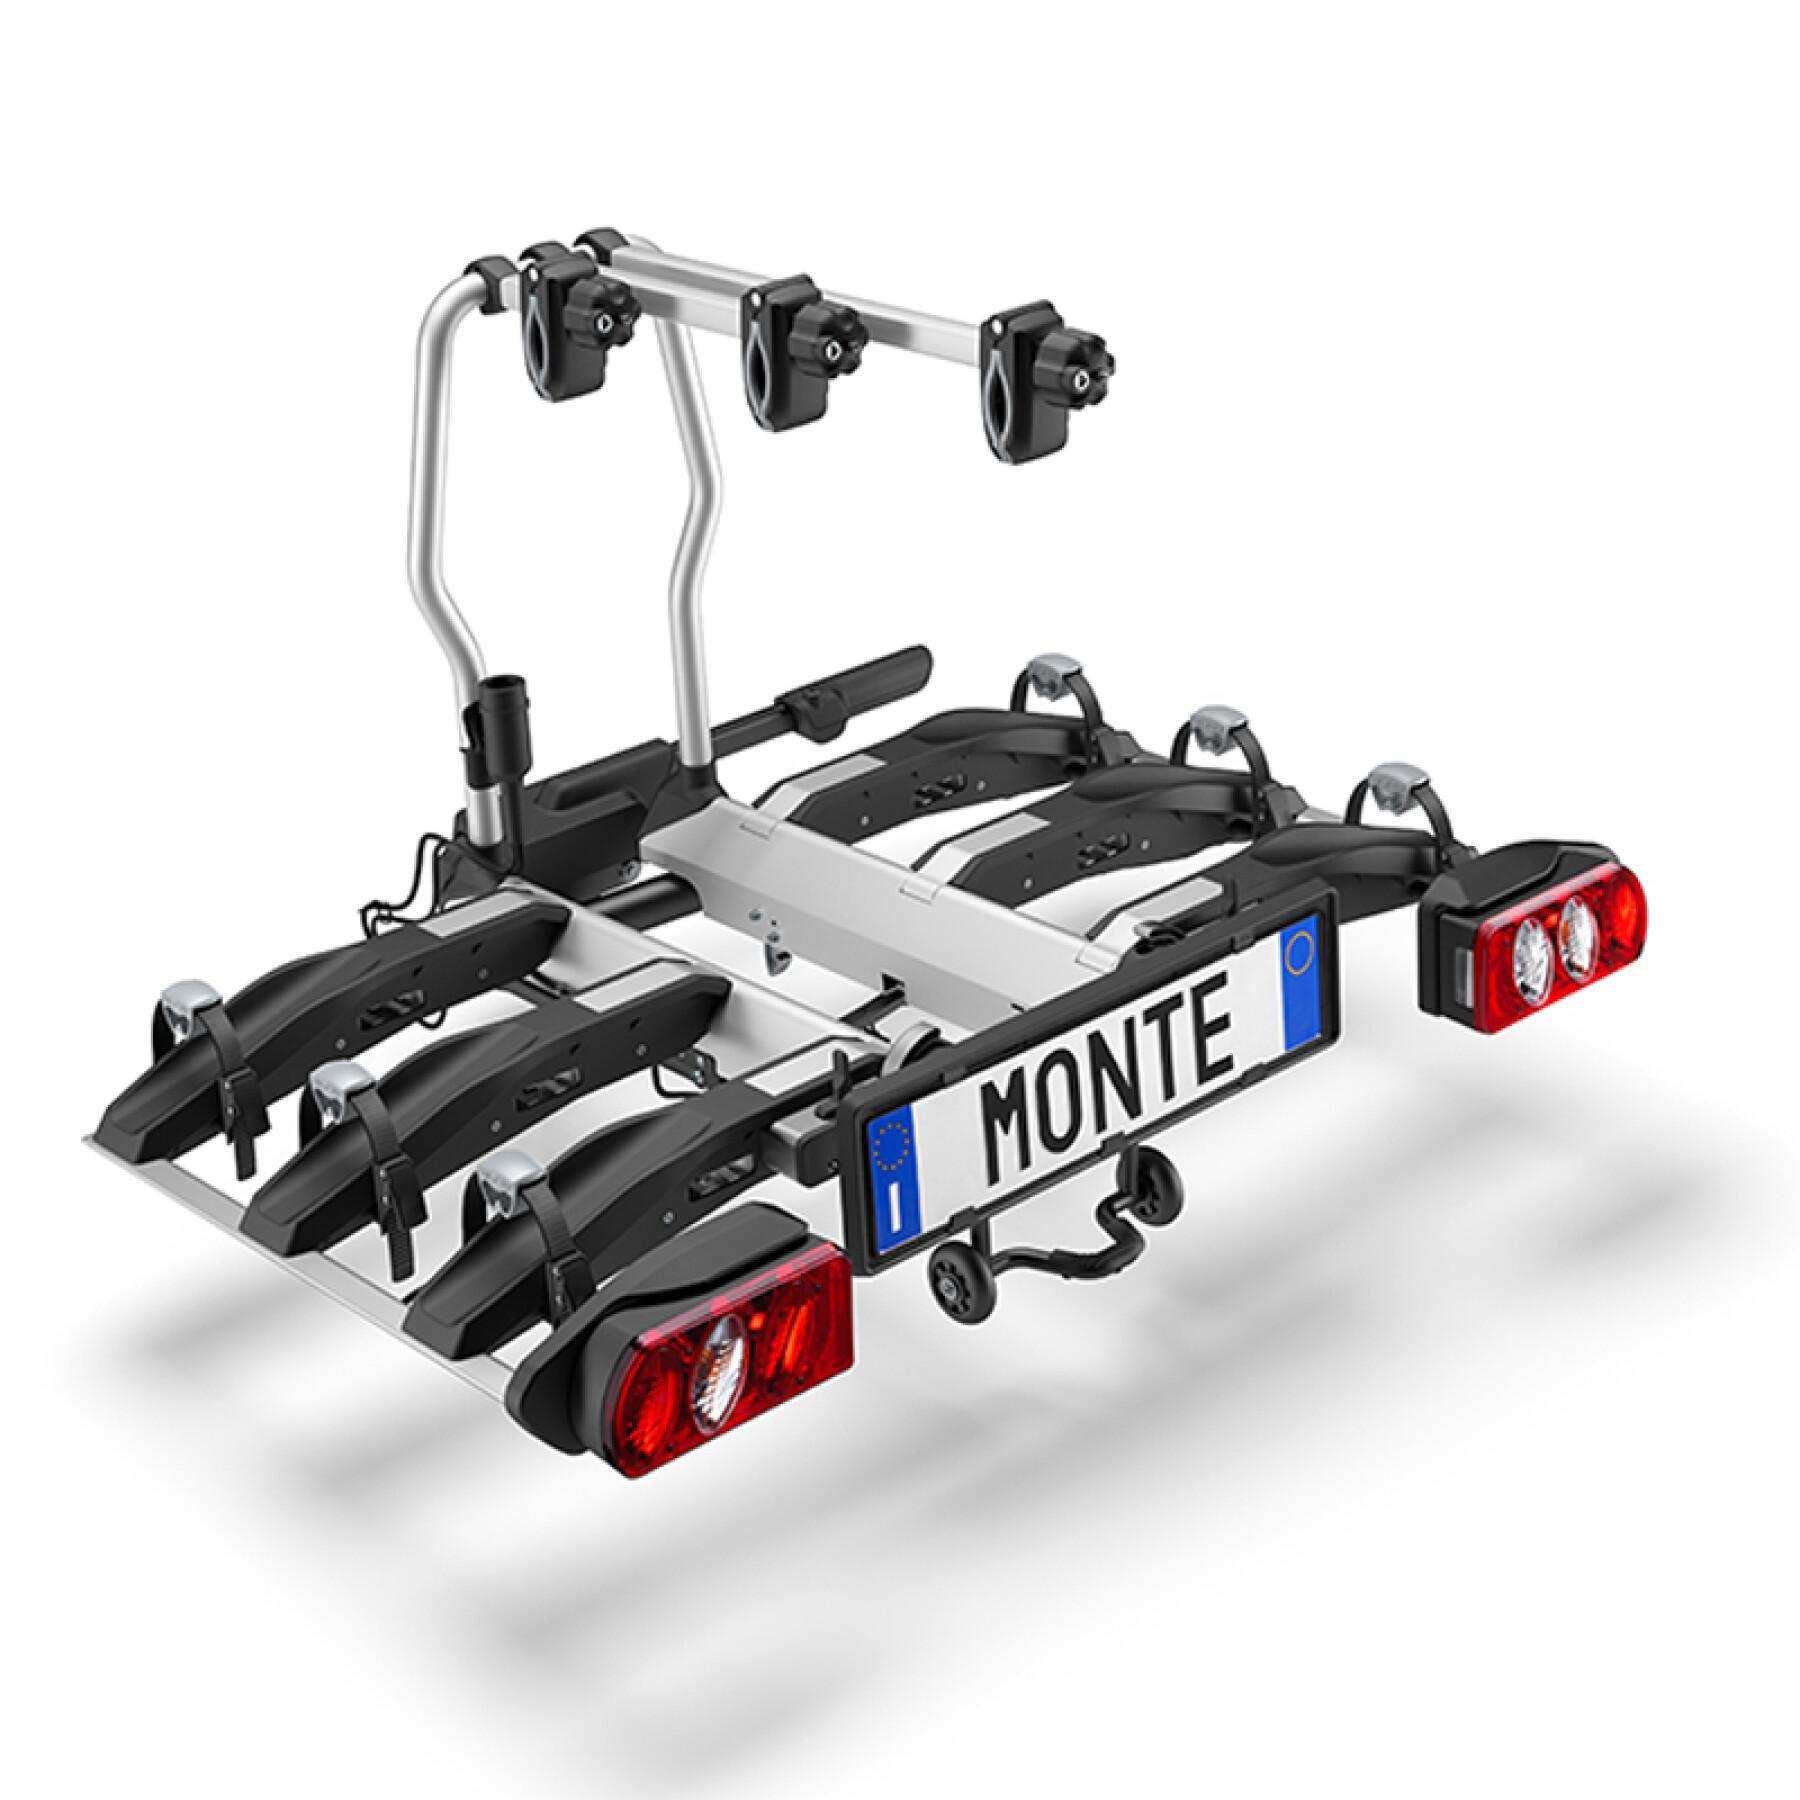 Bike rack mounts 3 folding bikes with ramp Elite